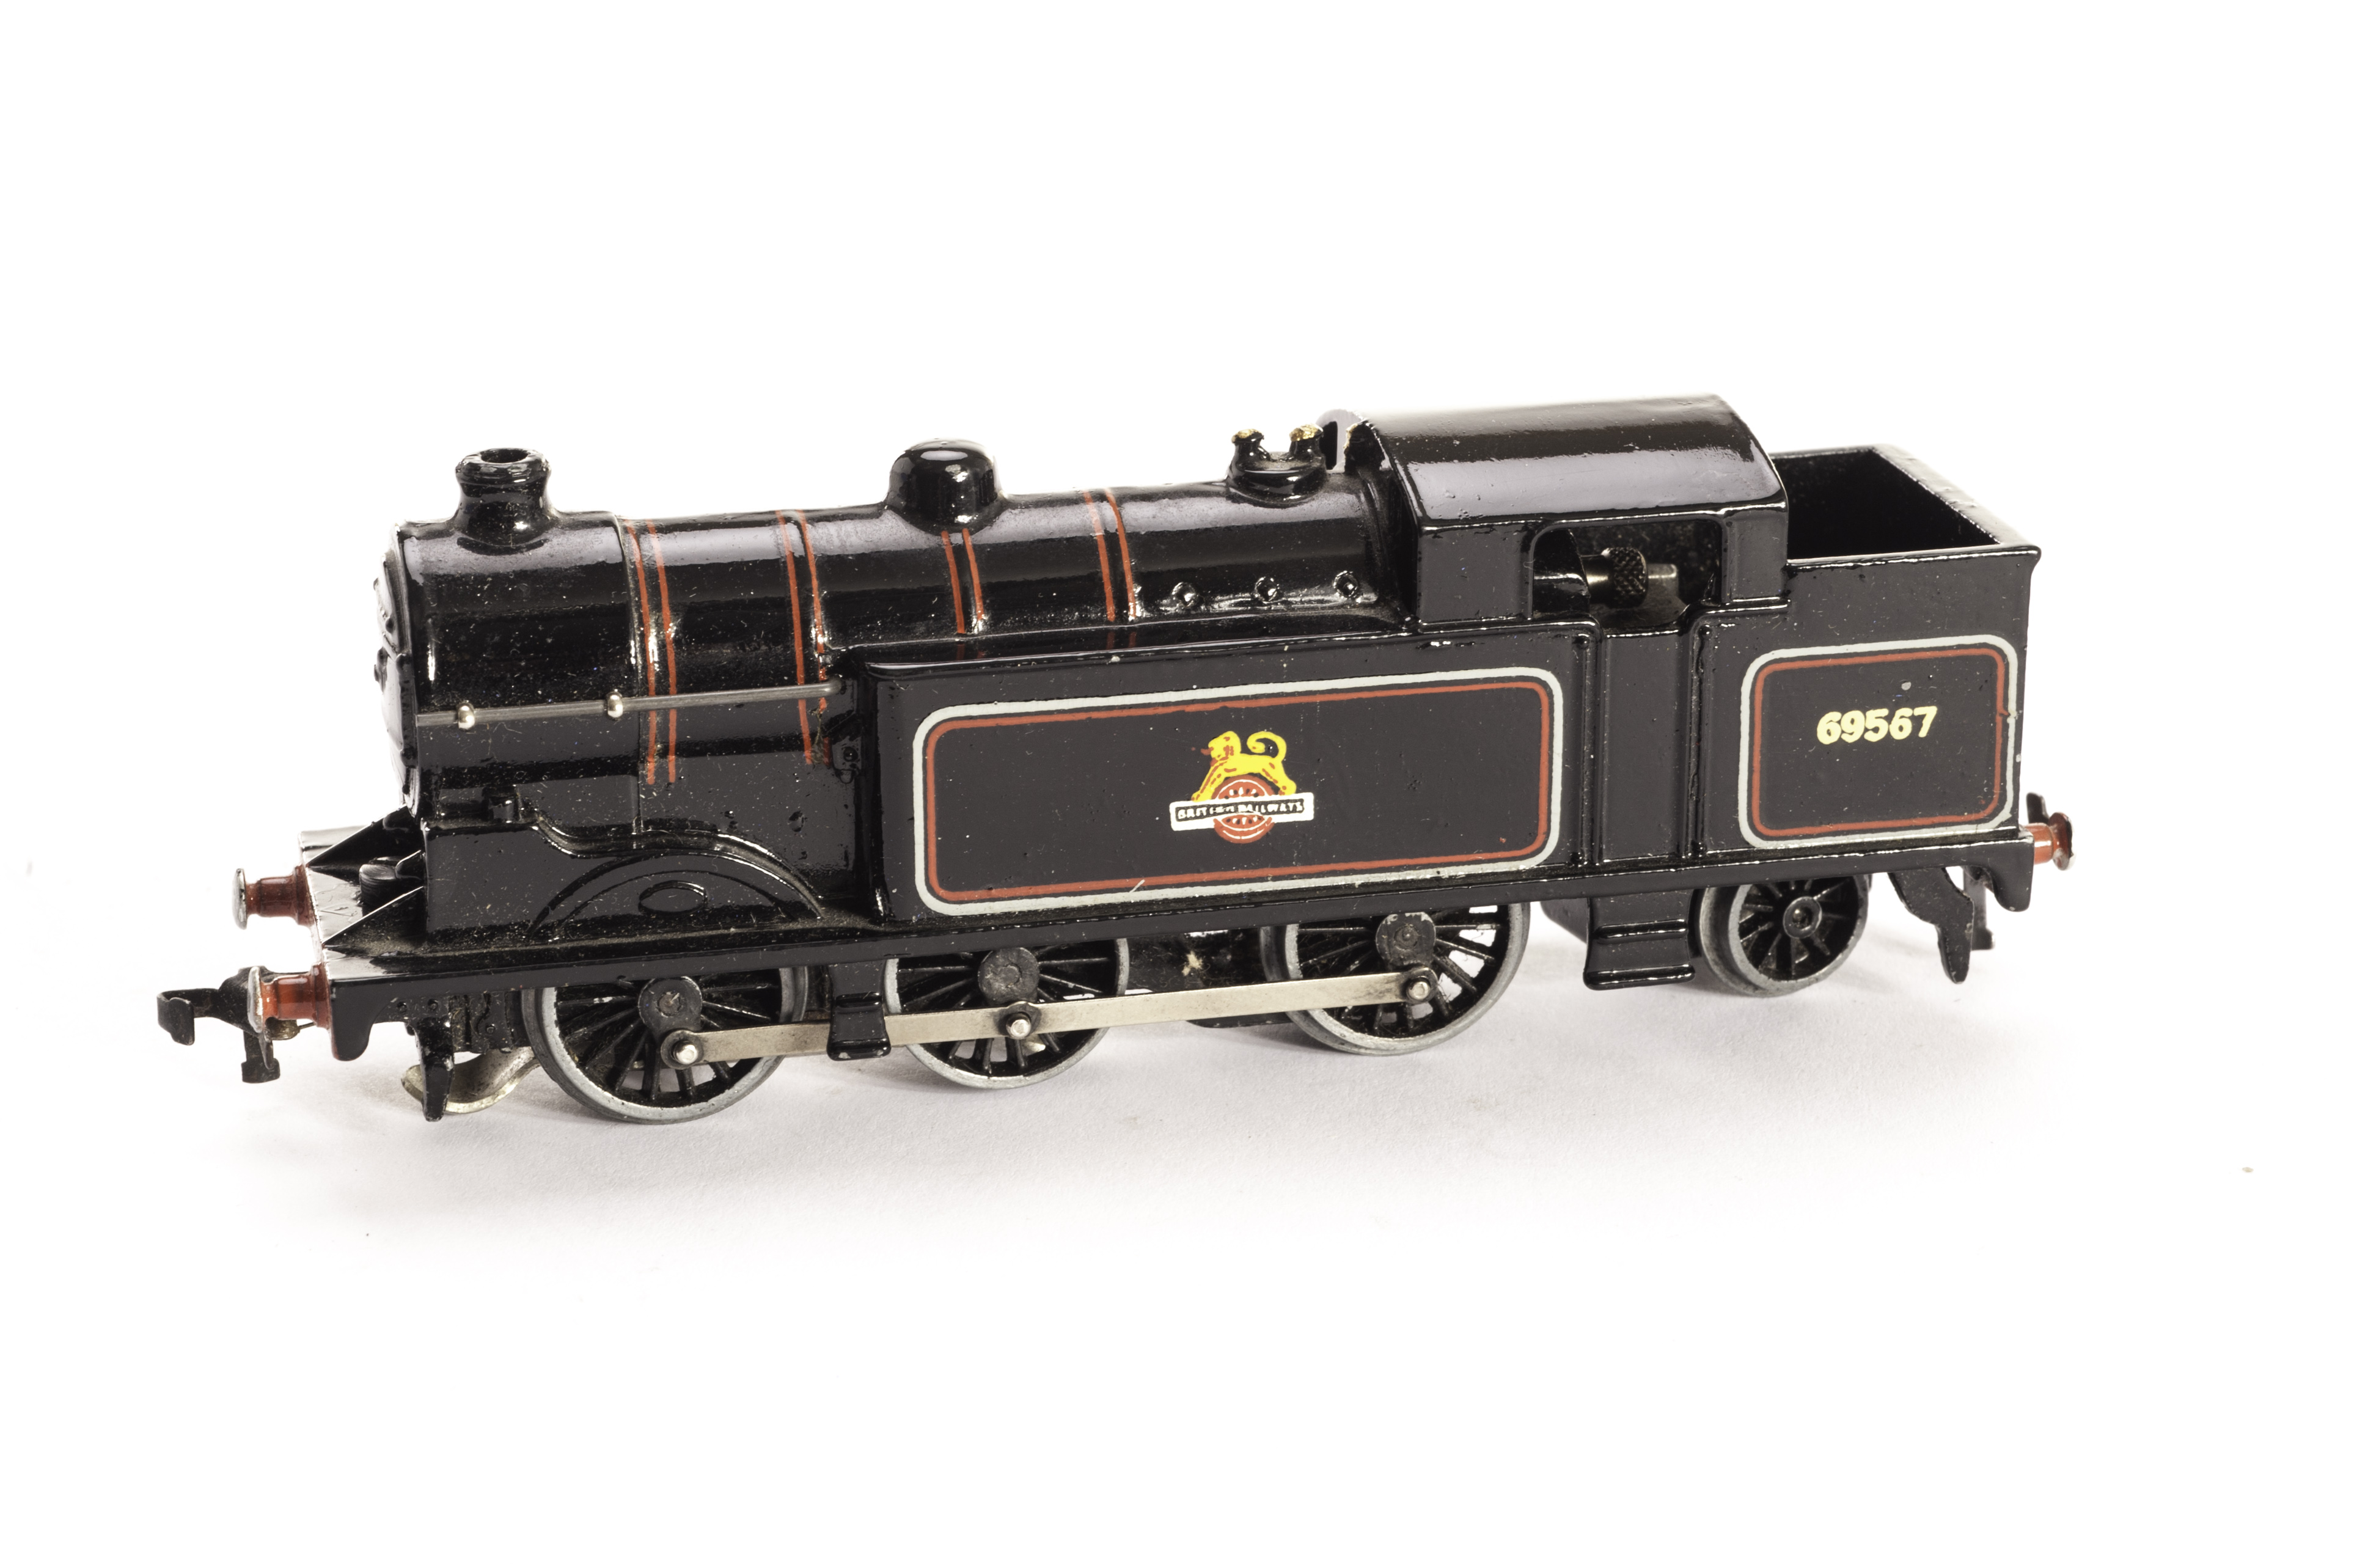 A Hornby Dublo 00 Gauge 3-Rail EDL17 BR gloss black 0-6-2T, no 69567, in original plain mid blue